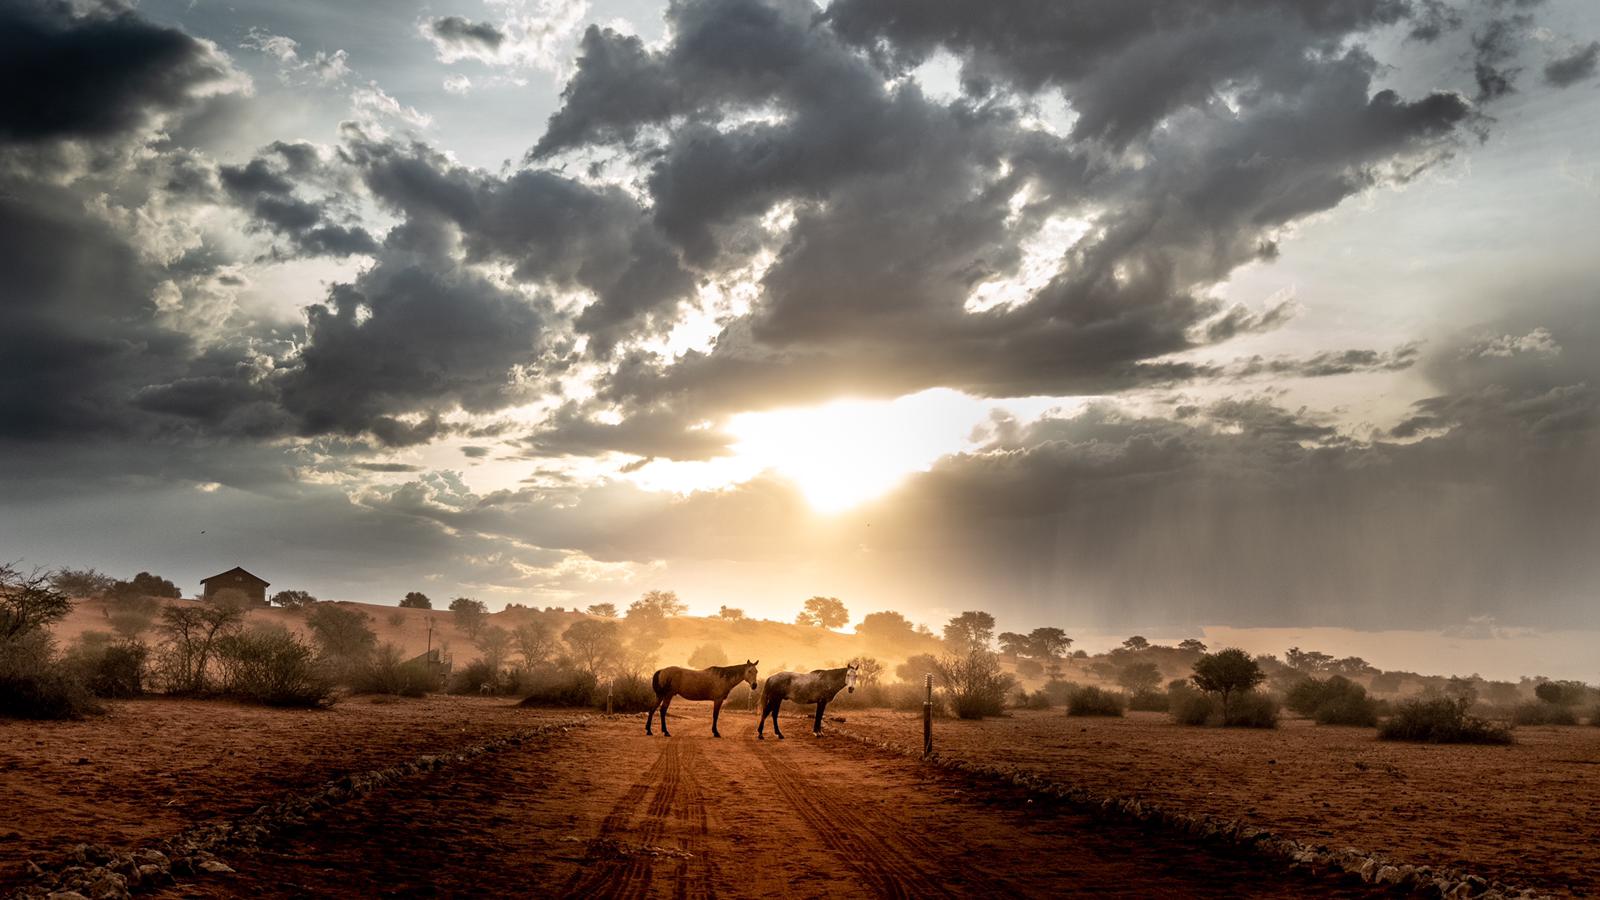 Bagatelle Lodge - Kalahari Game Ranch - Namibia - Horses on the road